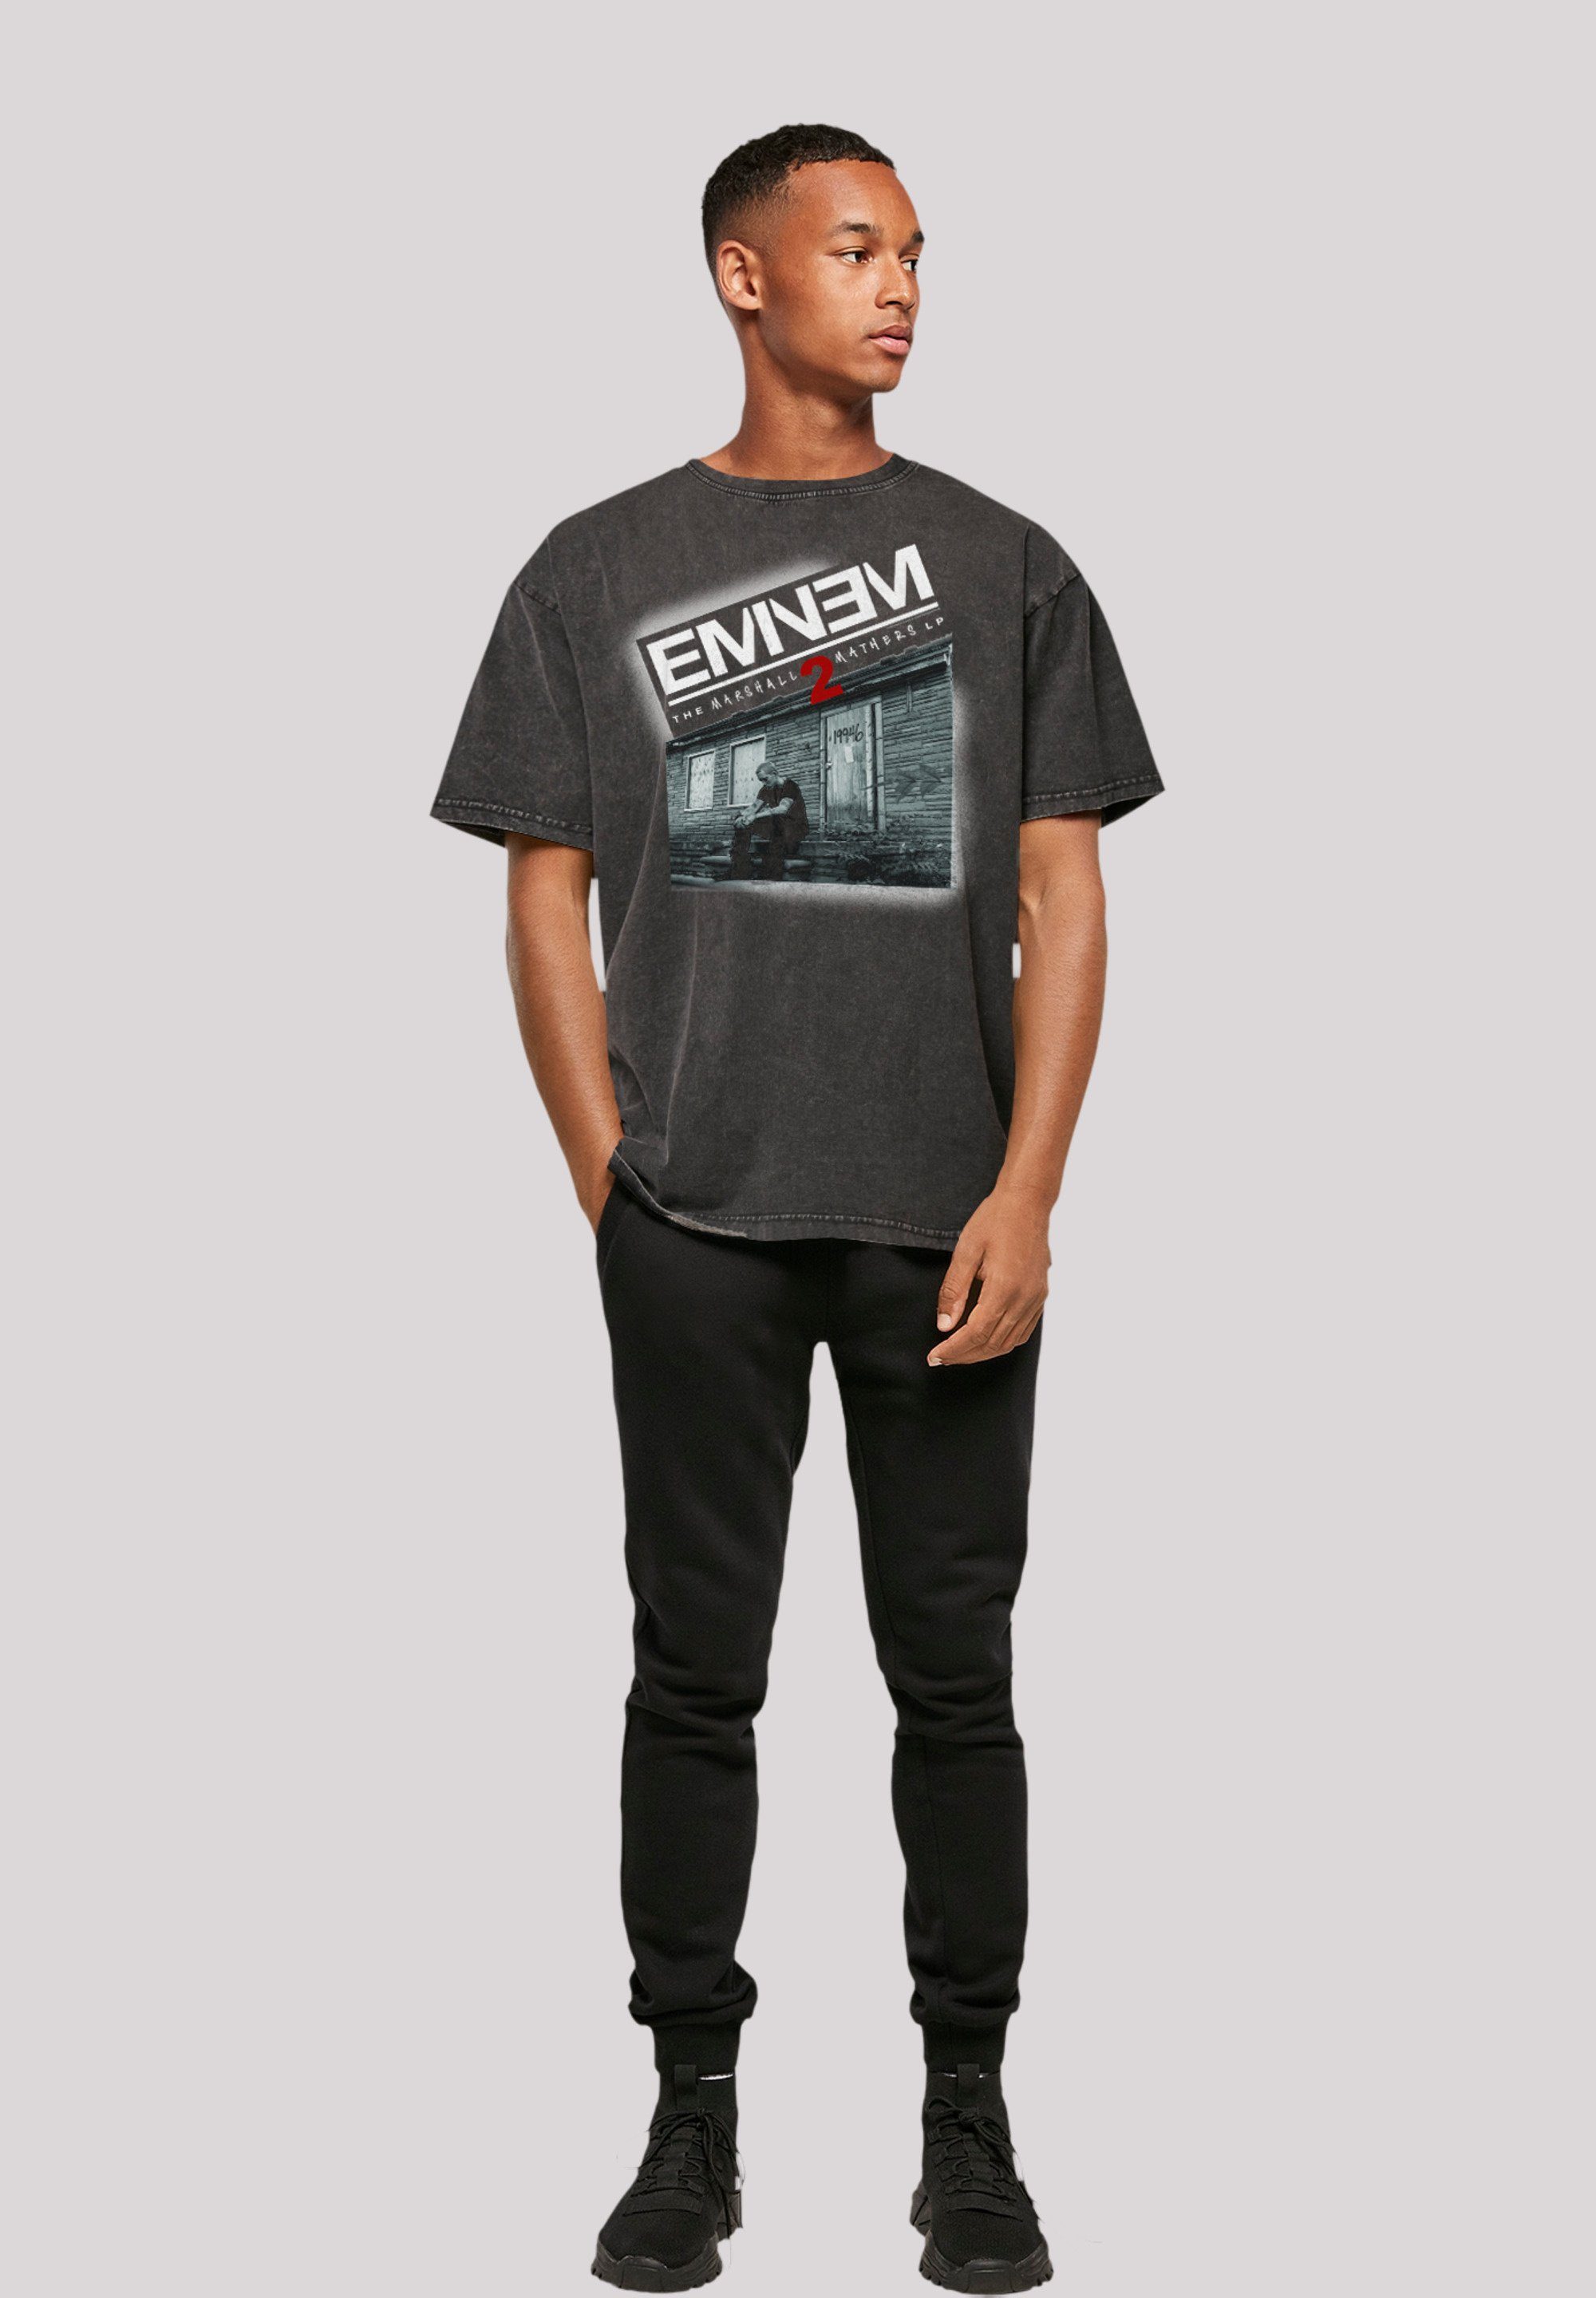 Qualität, 2 Musik Music Premium F4NT4STIC schwarz Rap Oldschool Mathers Marshall Eminem T-Shirt